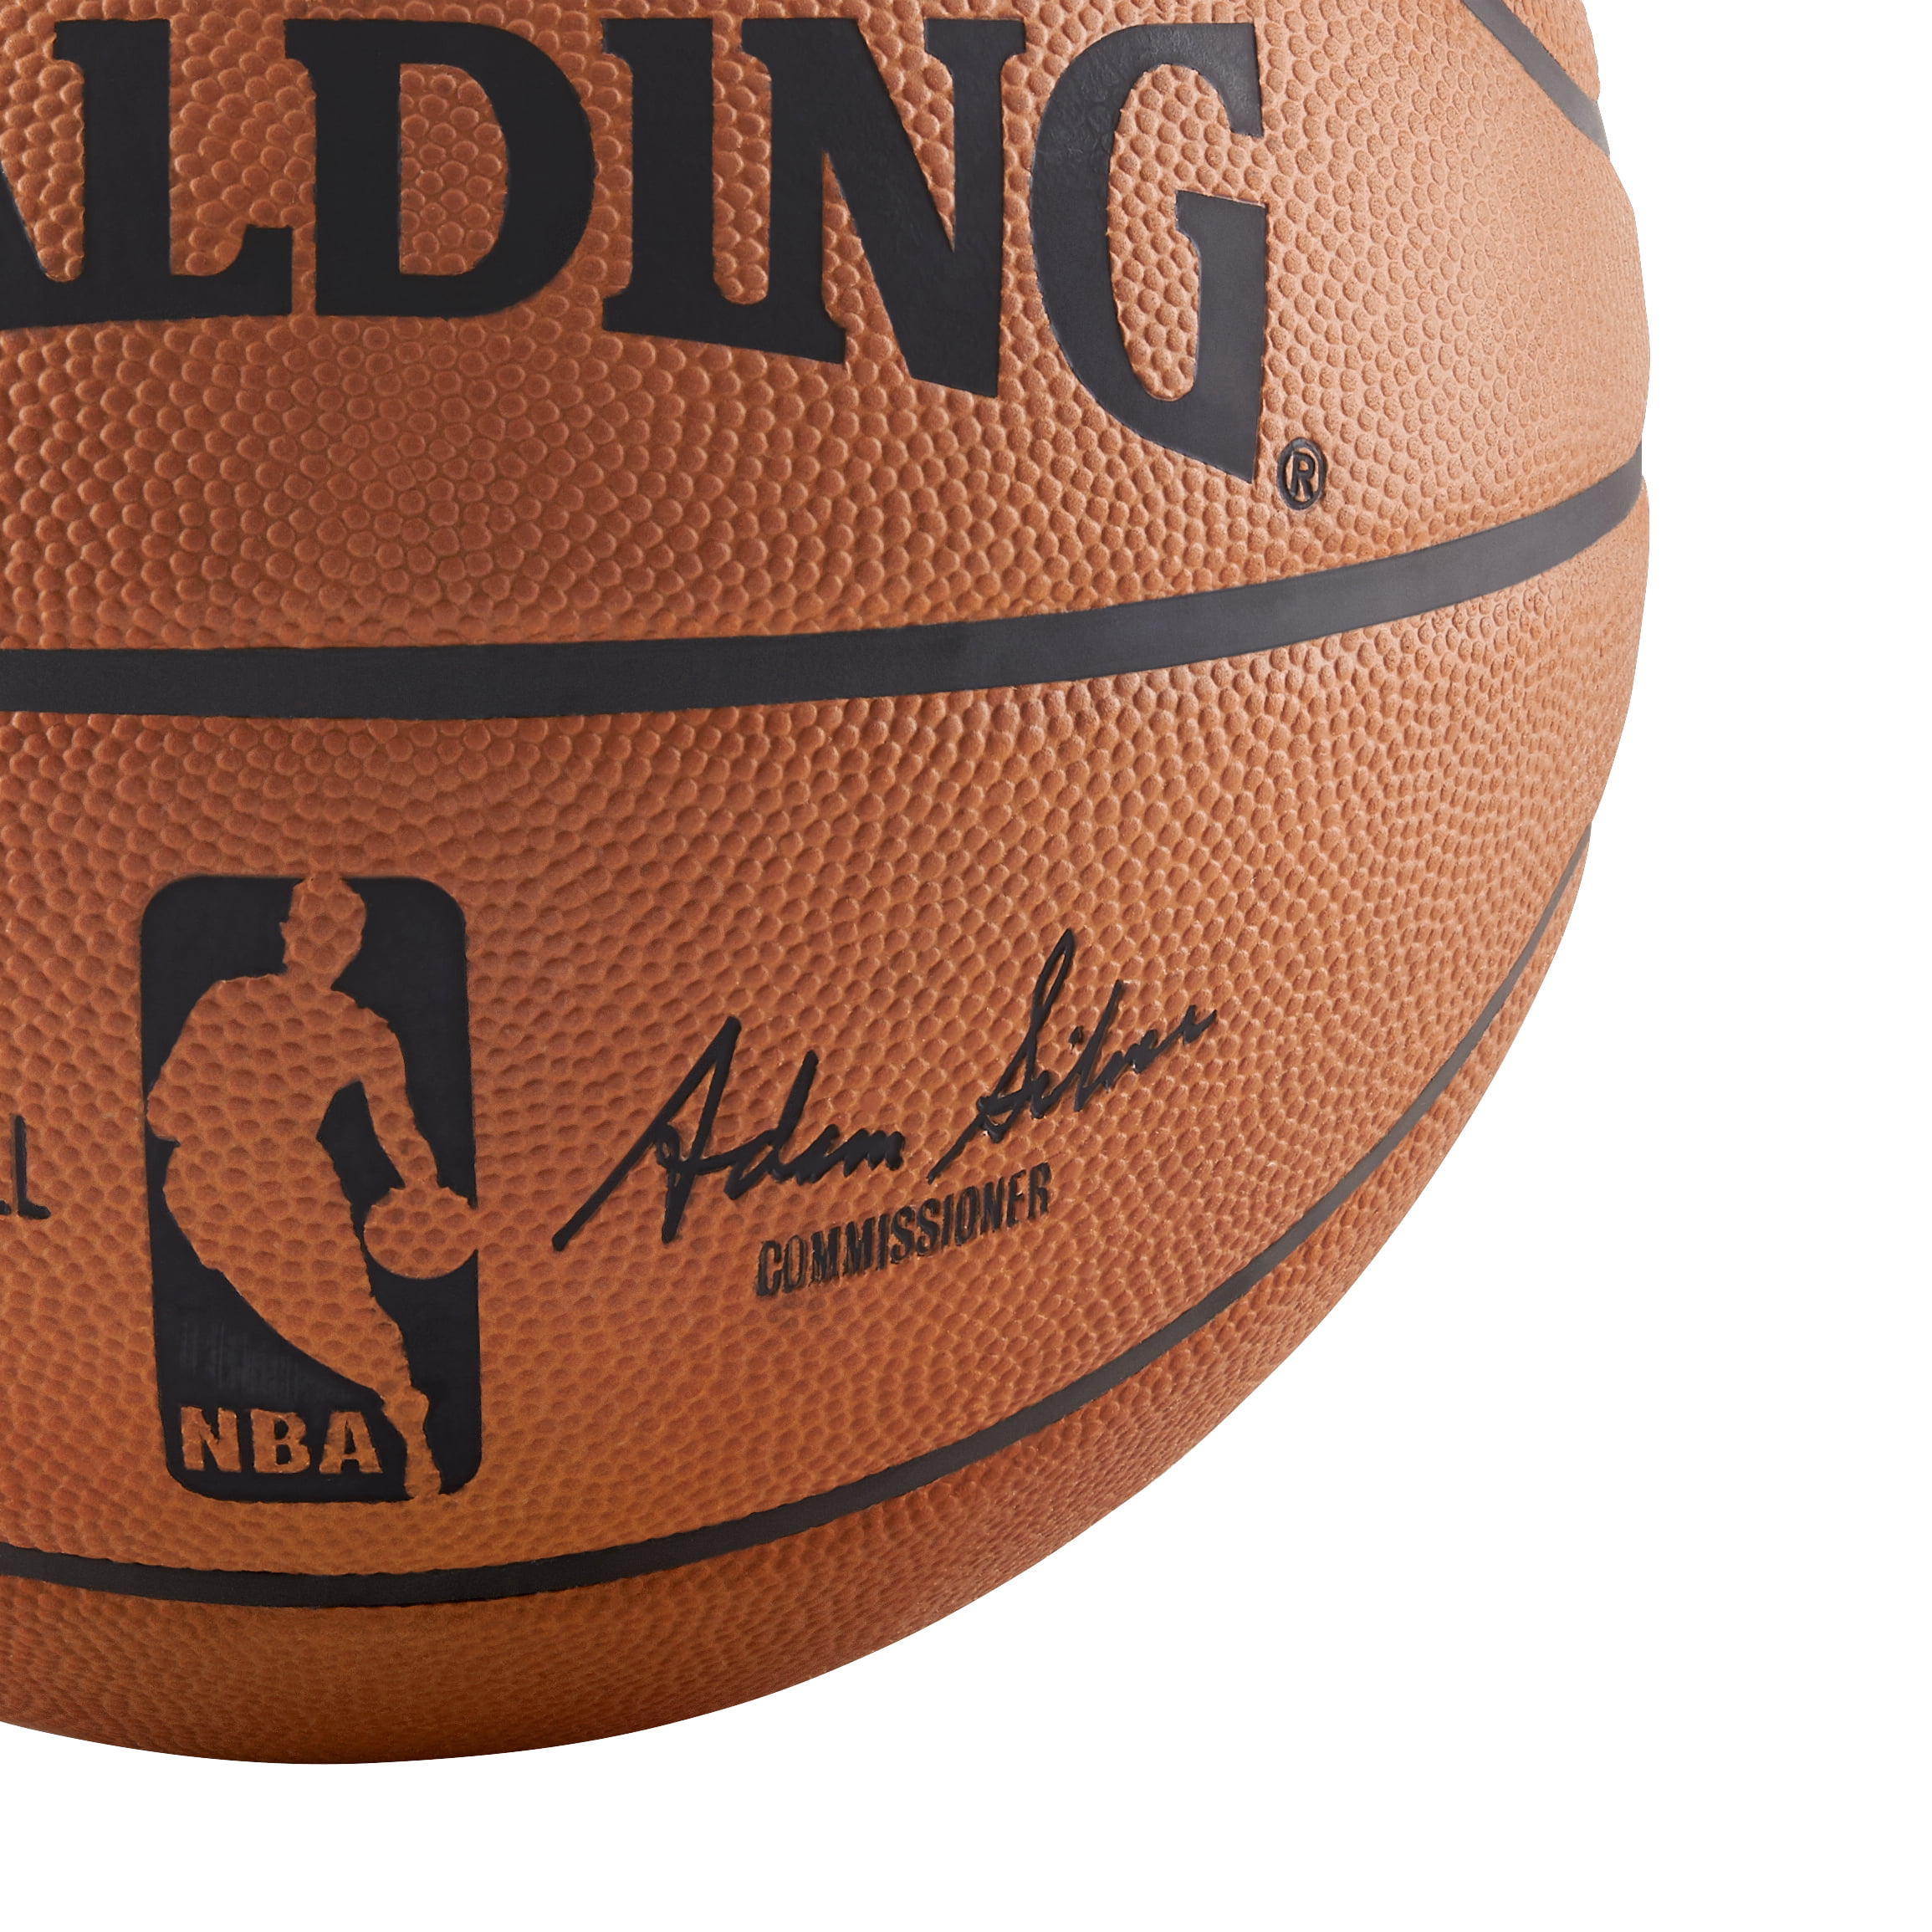 Original balling. Мяч Спалдинг НБА. Баскетбольный мяч Spalding NBA. Мяч НБА Сполдинг кожаный. Баскетбольный мяч Спалдинг НБА.